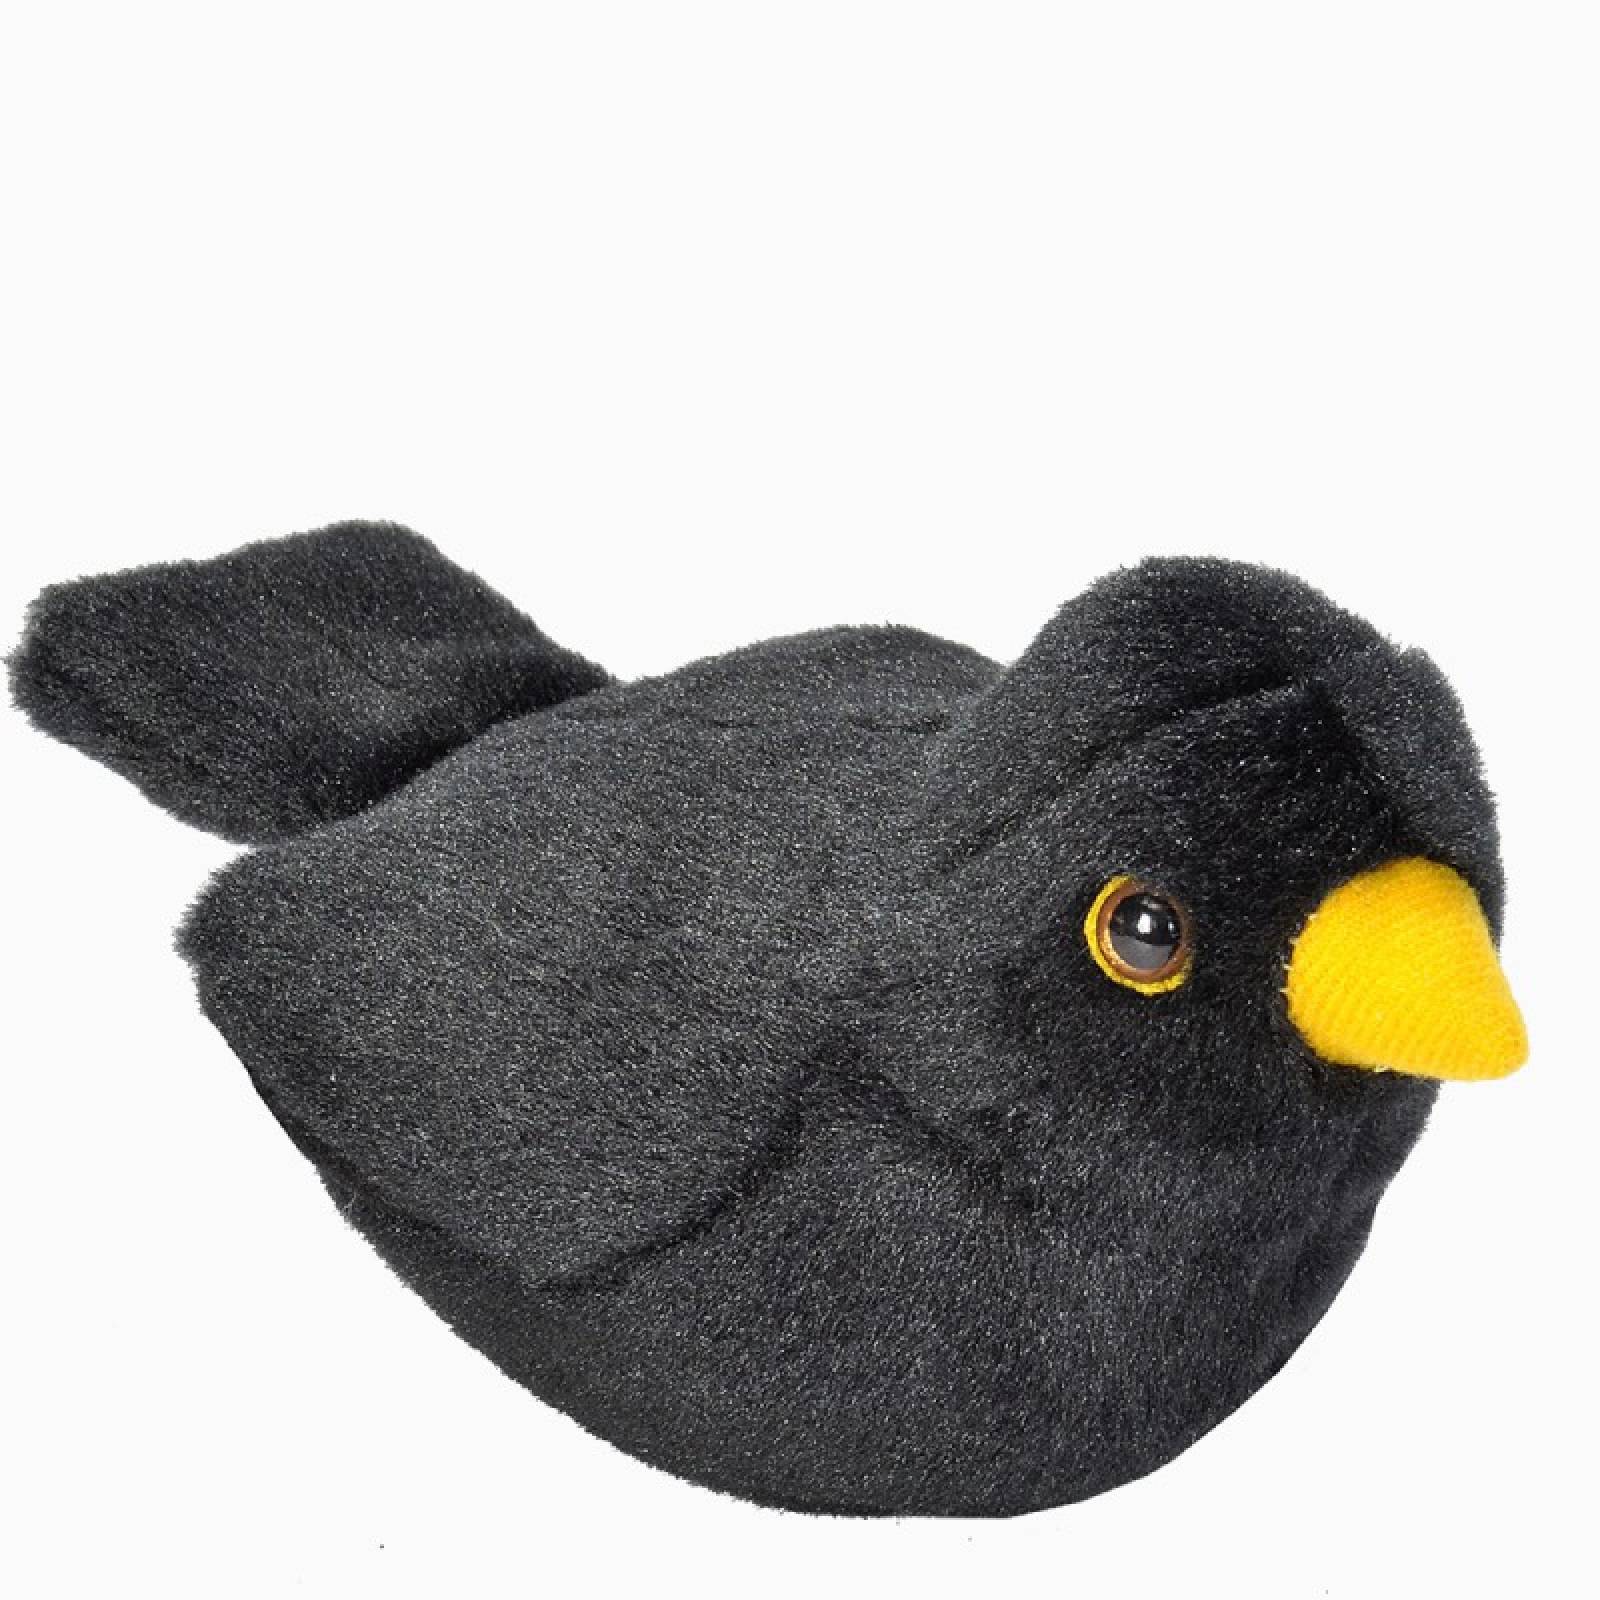 European Blackbird Soft Toy With Sound By RSPB